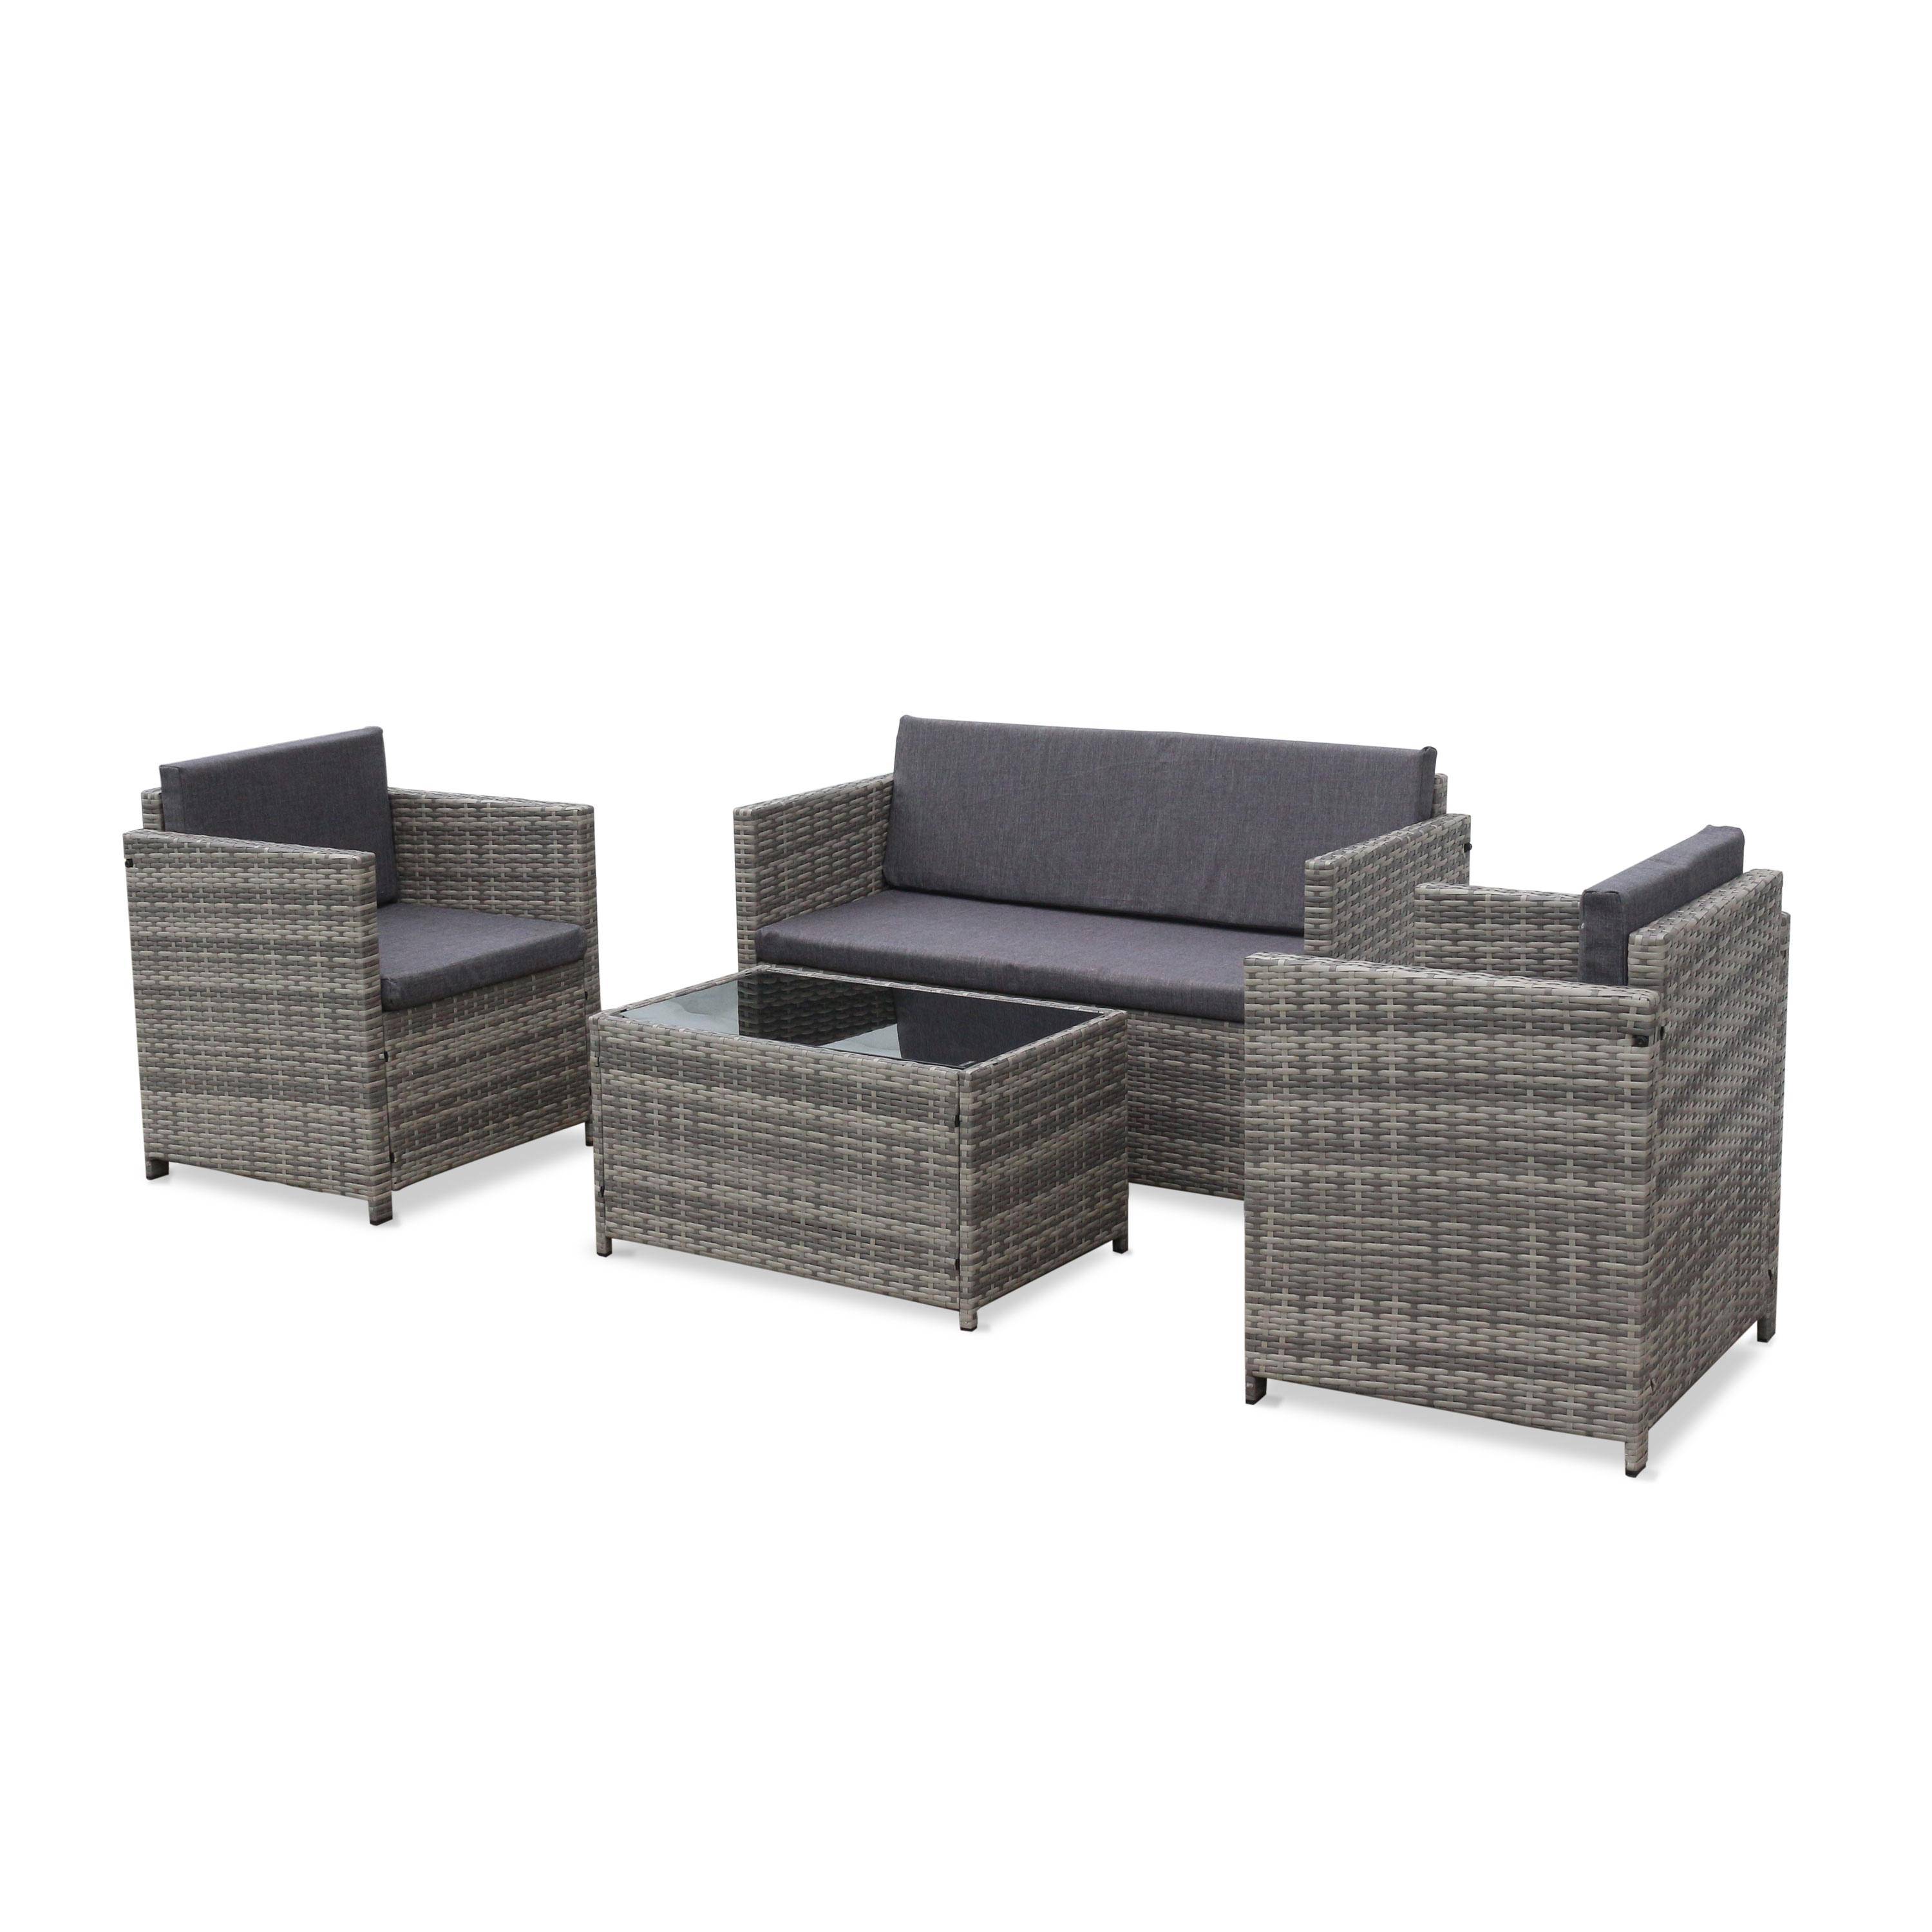 4-seater polyrattan garden sofa set - sofa, 2 armchairs, coffee table - Perugia - Mixed Grey rattan, Grey cushions,sweeek,Photo2